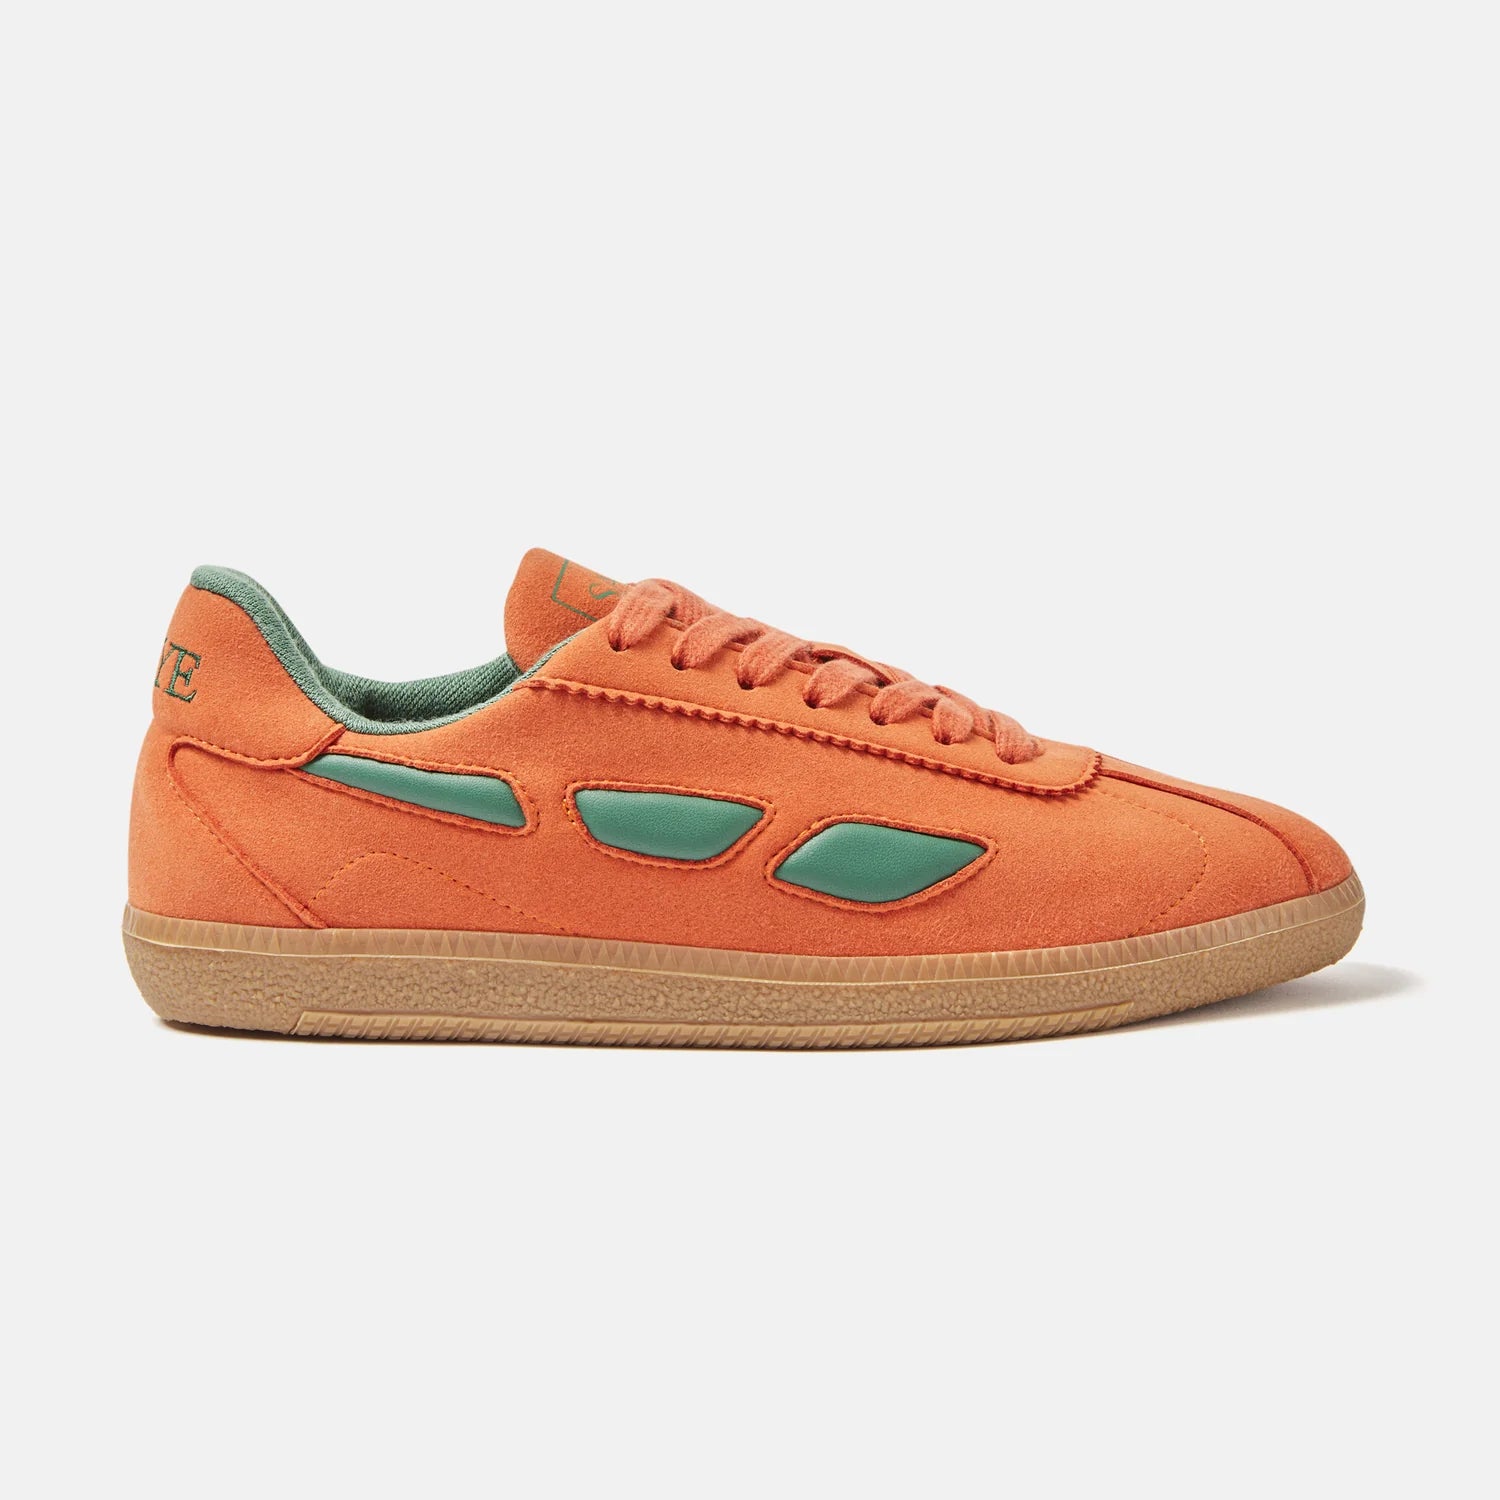 A pair of SAYE Modelo '70 Sneakers - Orange & Green.